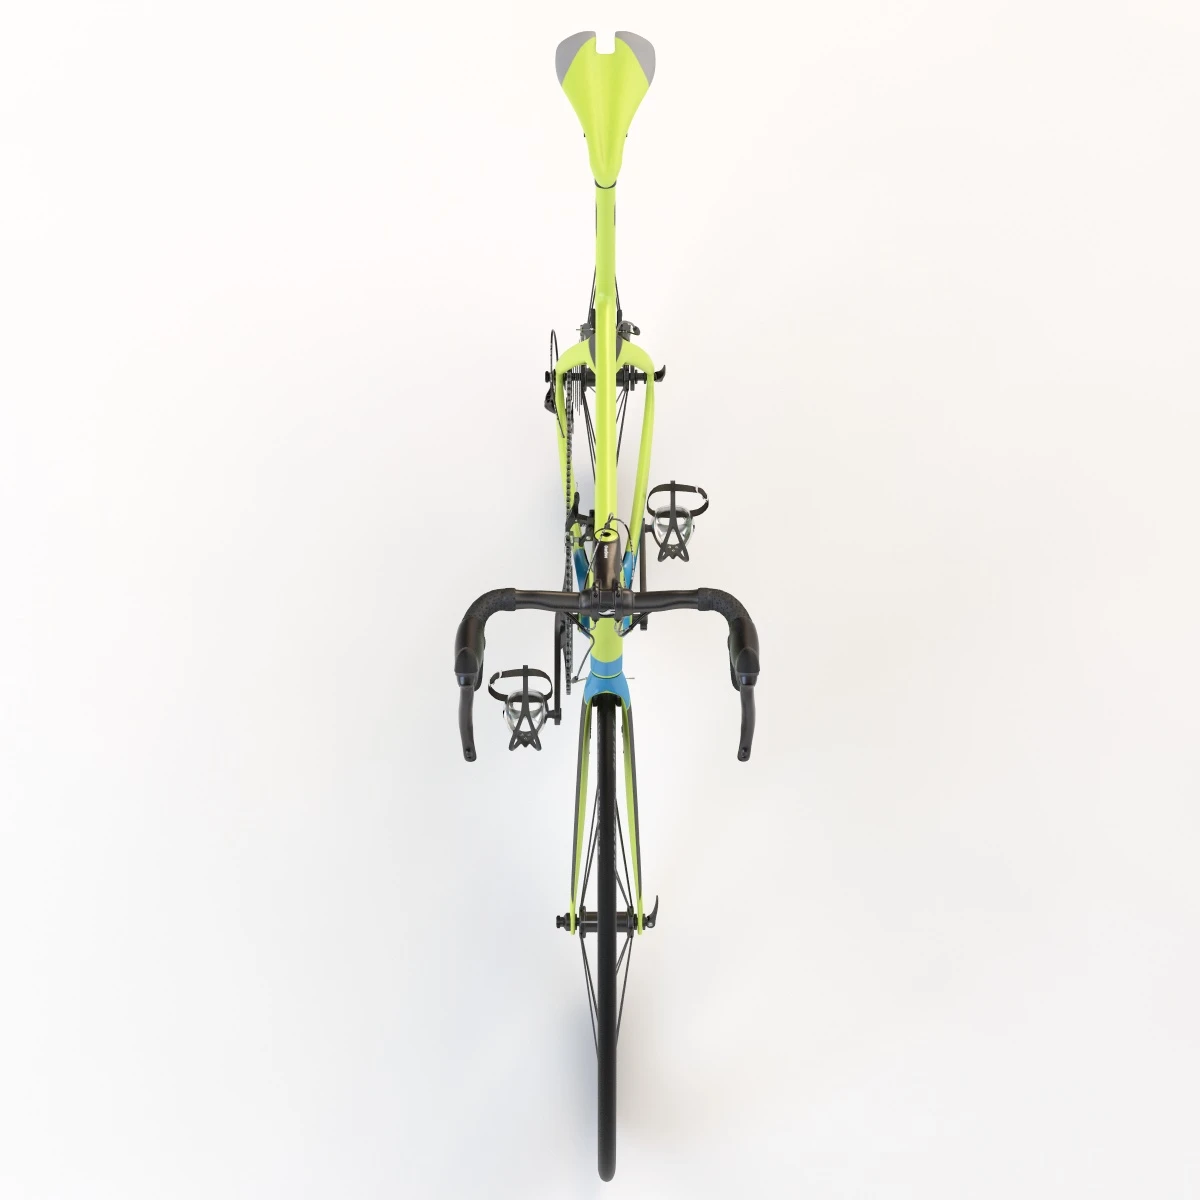 Giant Propel Advanced Sl-2 Green-Blue Lightweight Sprinter Bicycle 3D Model_07